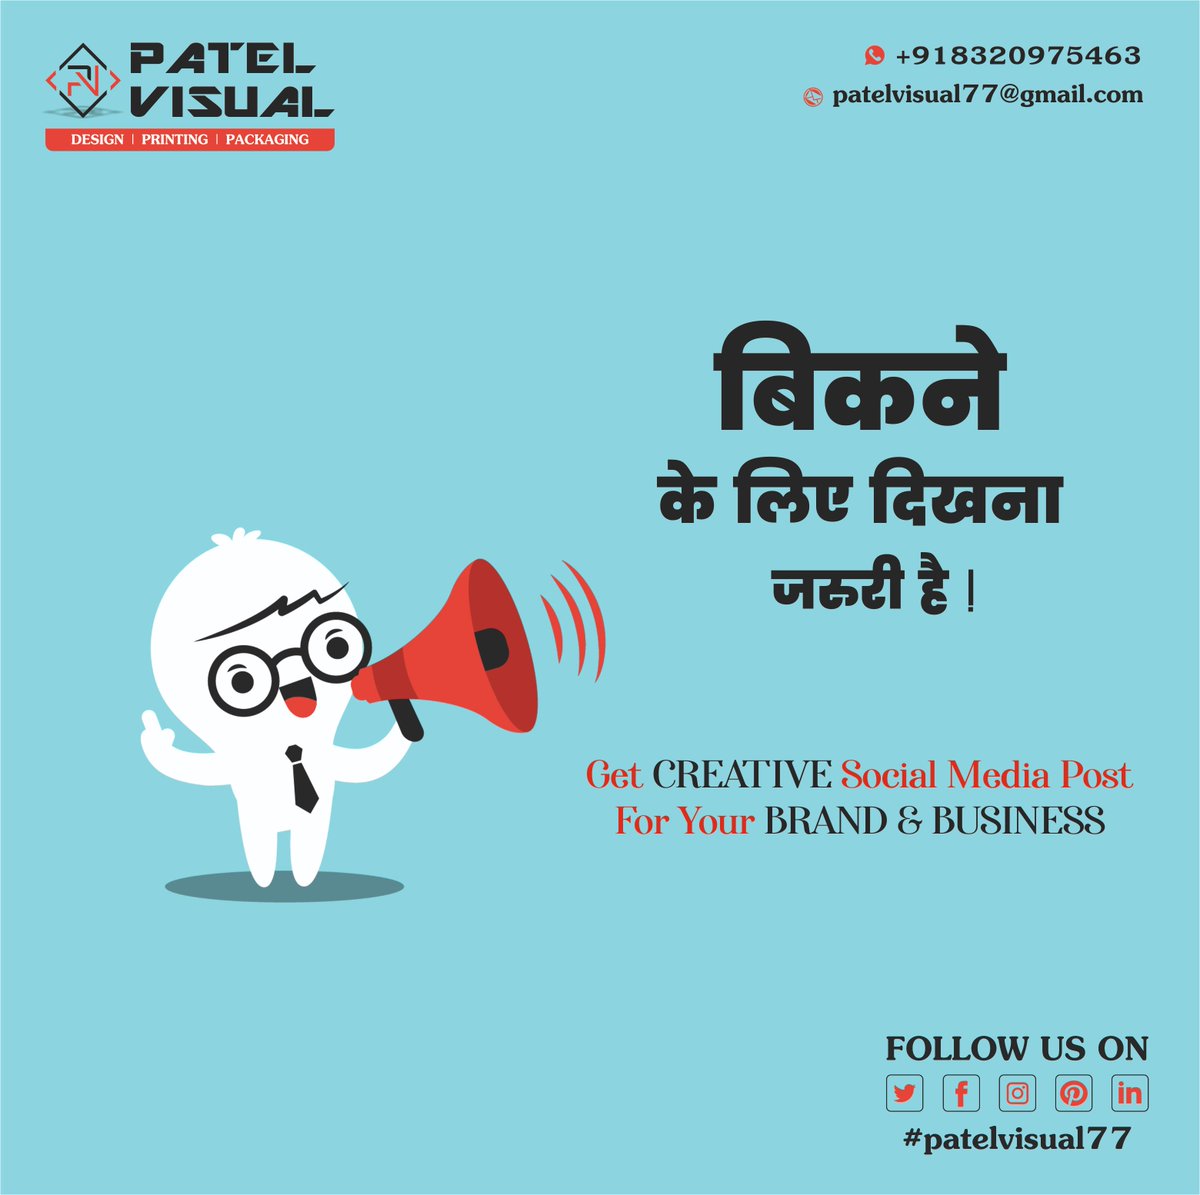 #patelvisual #graphicdesign #packagingdesign #logodesign #3dmockup #creativeideas #digitalvisitingcard